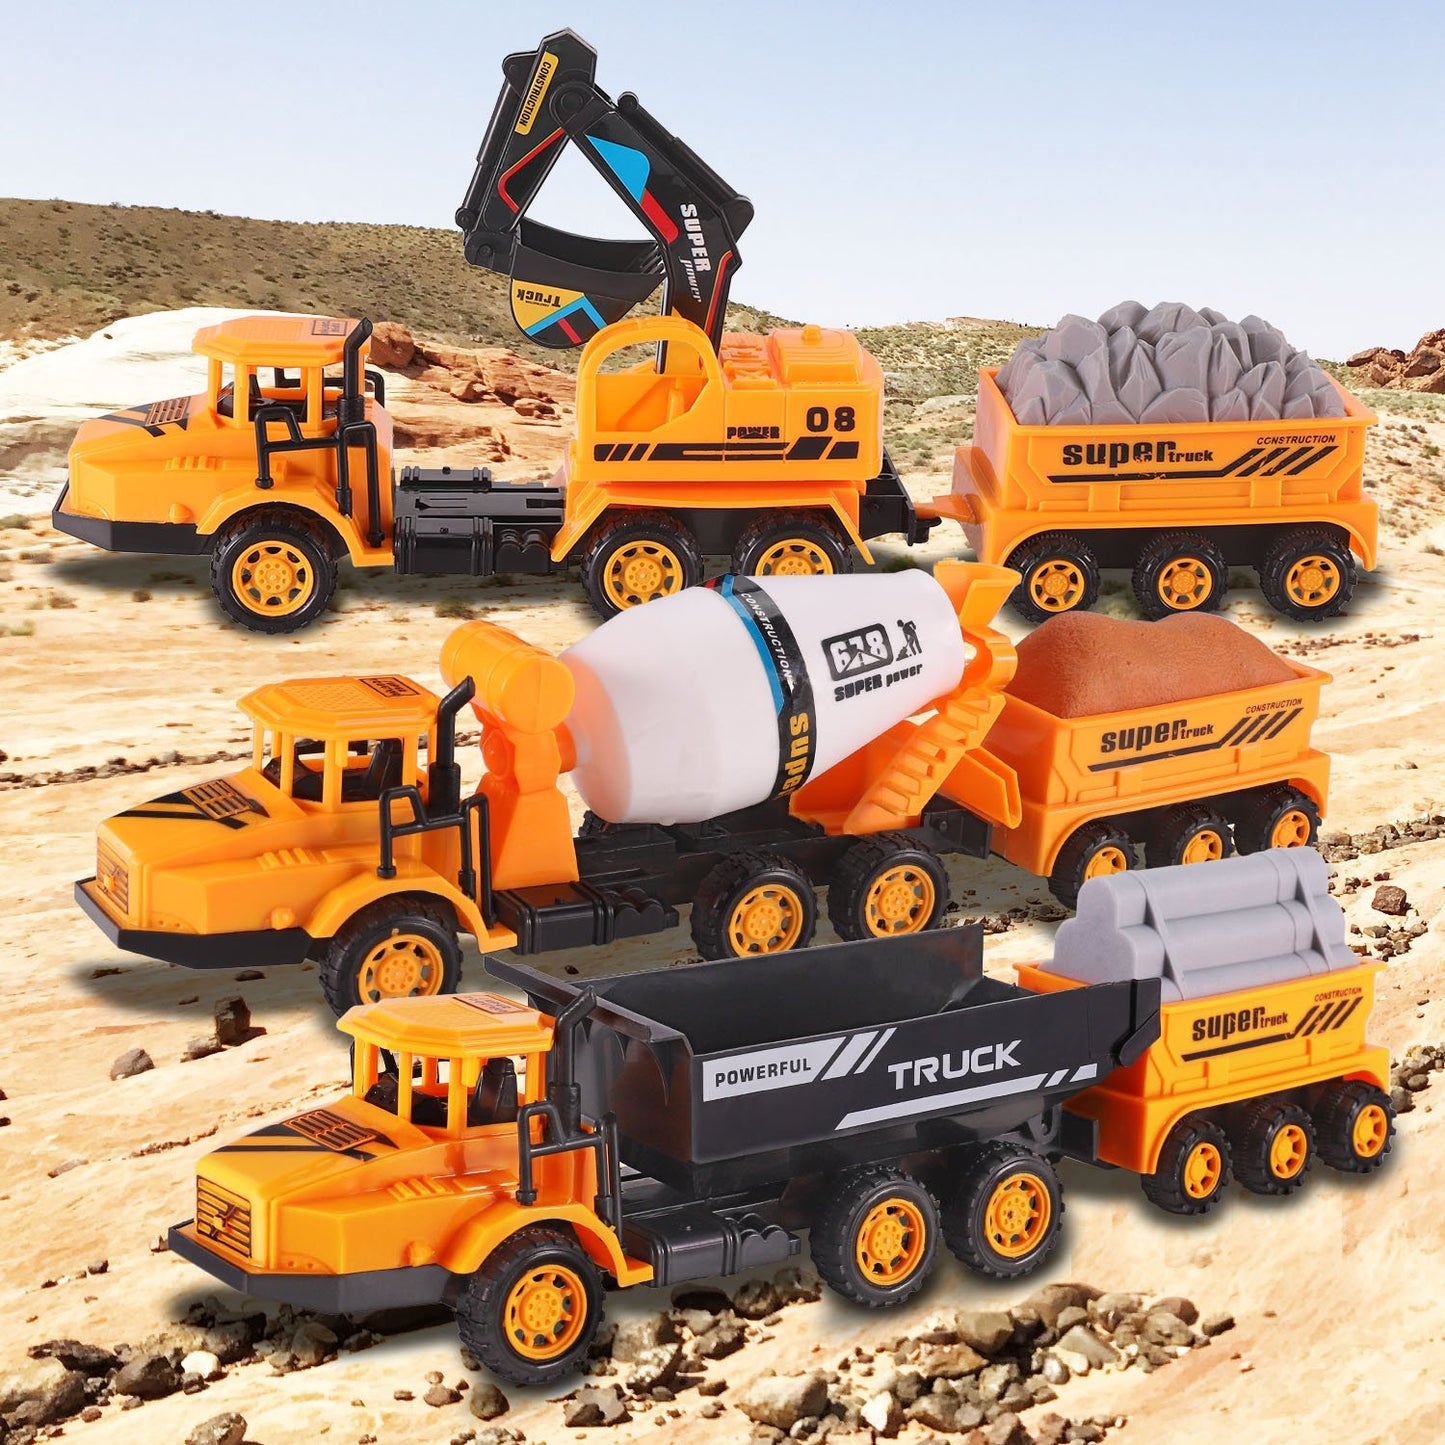 Set of 3 Deluxe Construction Toy Vehicles Playset - Dump Truck, Cement Truck, Excavator